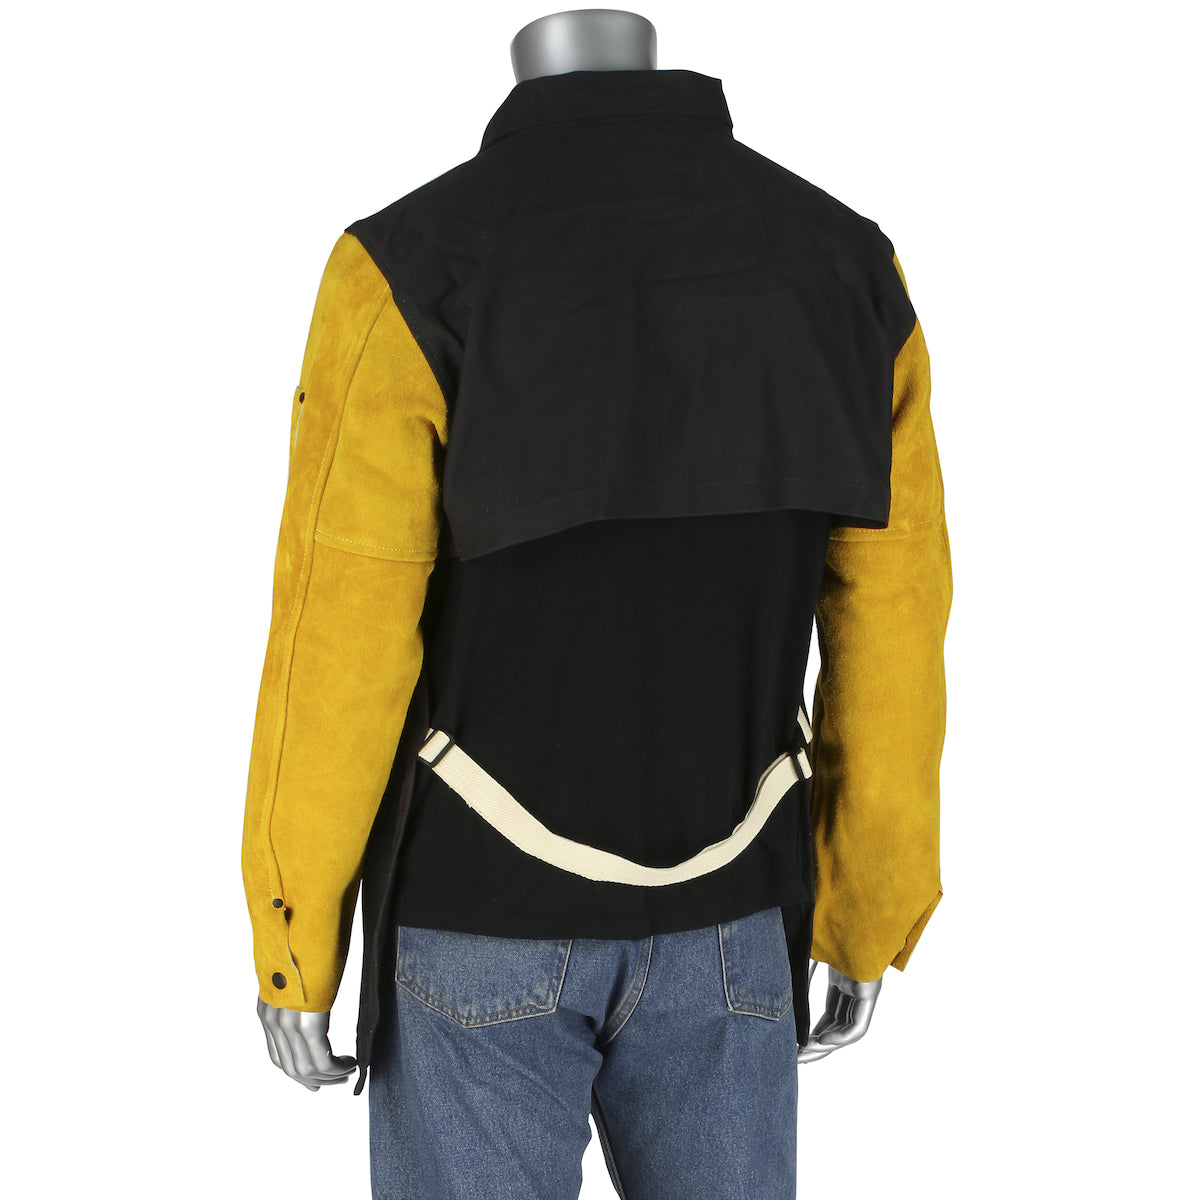 Ironcat 8051/XL Combination FR Cotton / Leather Cape Sleeve with Apron